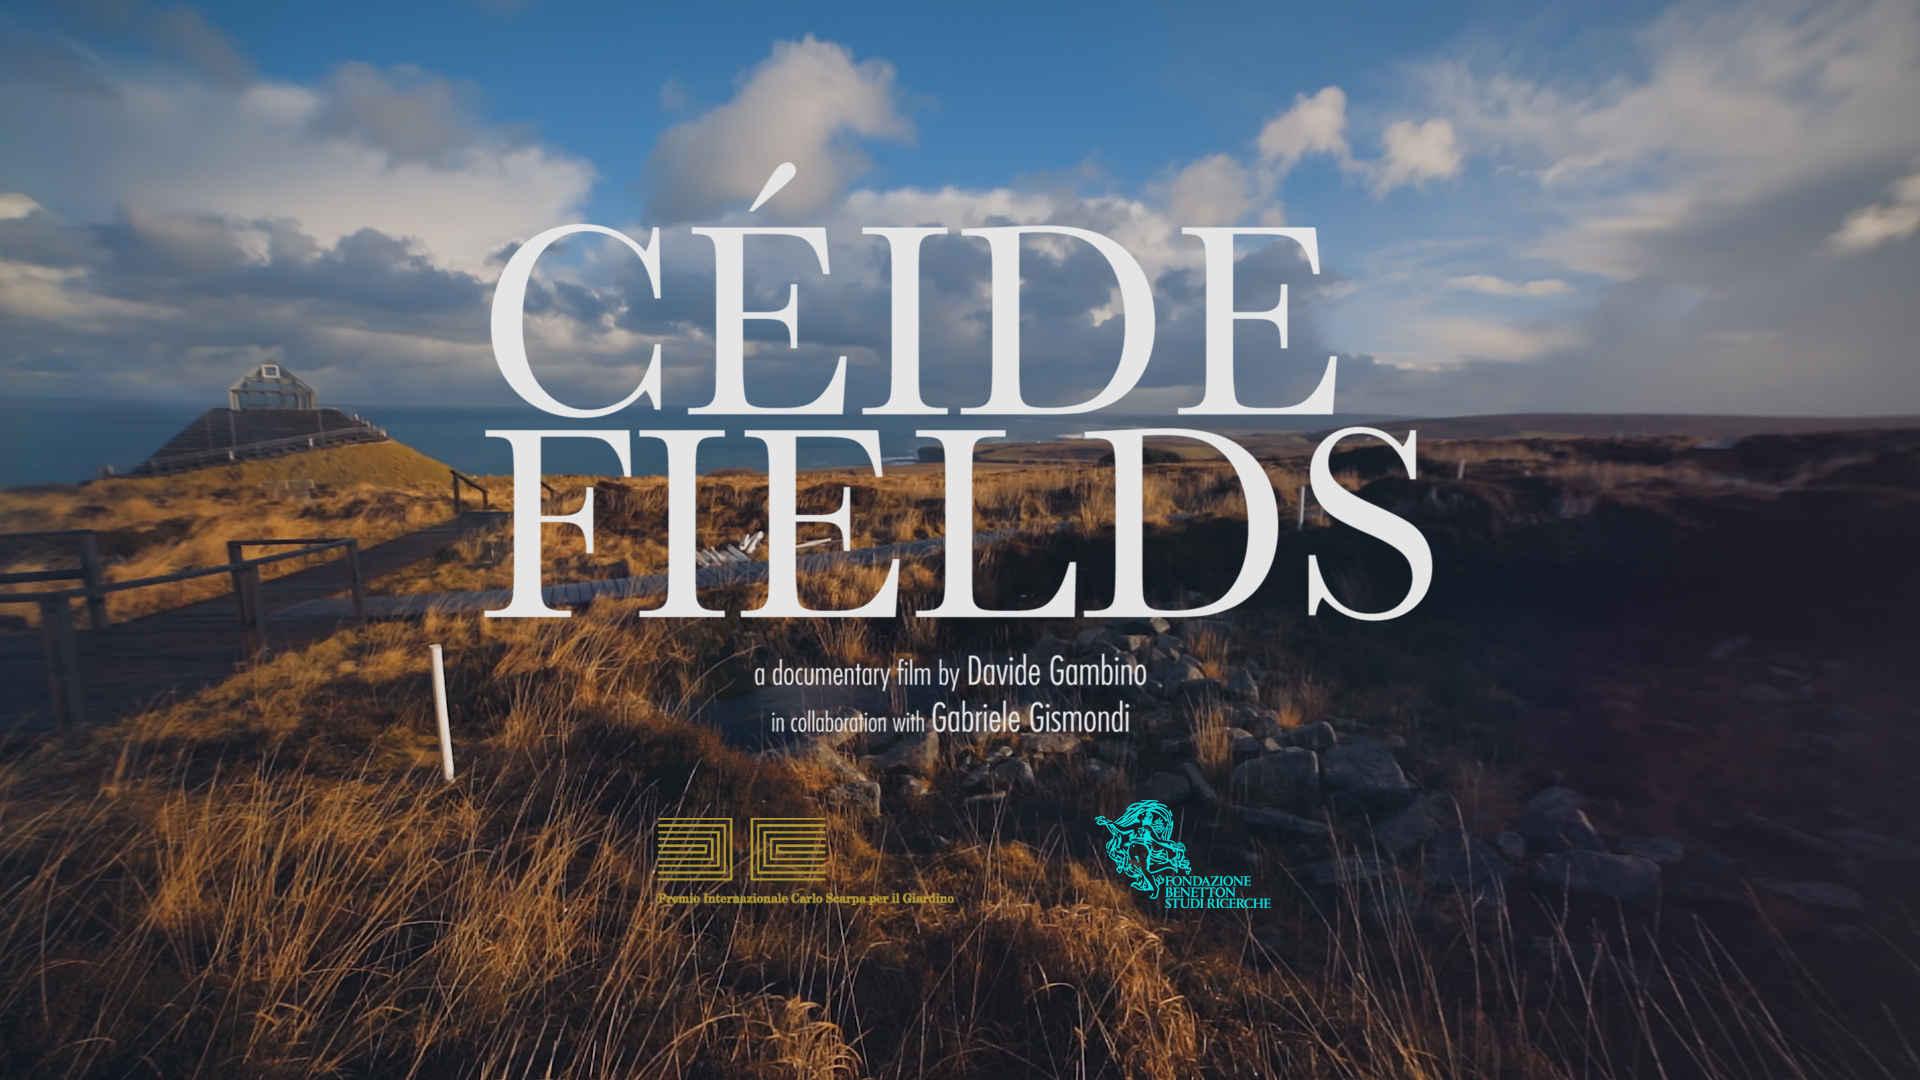 Céide_fields